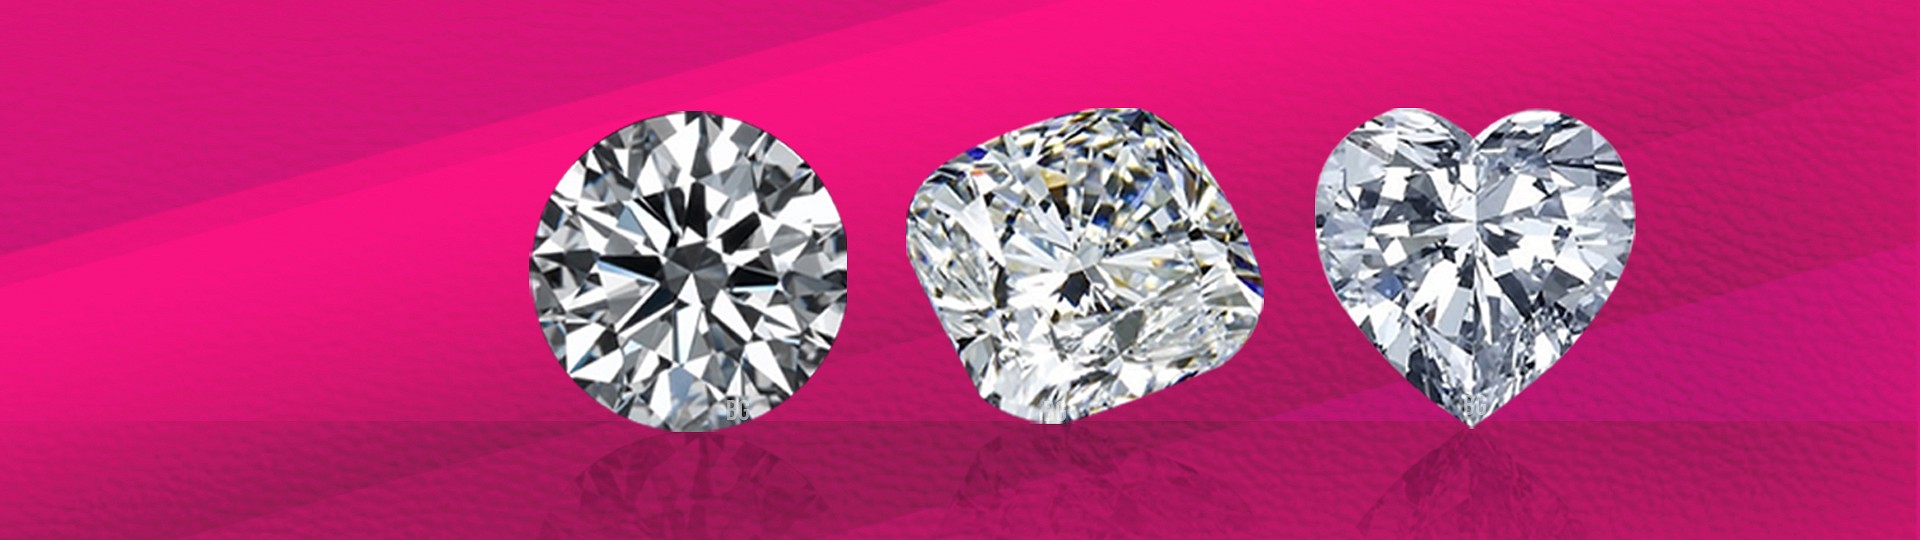 NO RESERVE LOTS - 100% Natural Diamonds | Day 1 by Bid Global International Auctioneers LLC